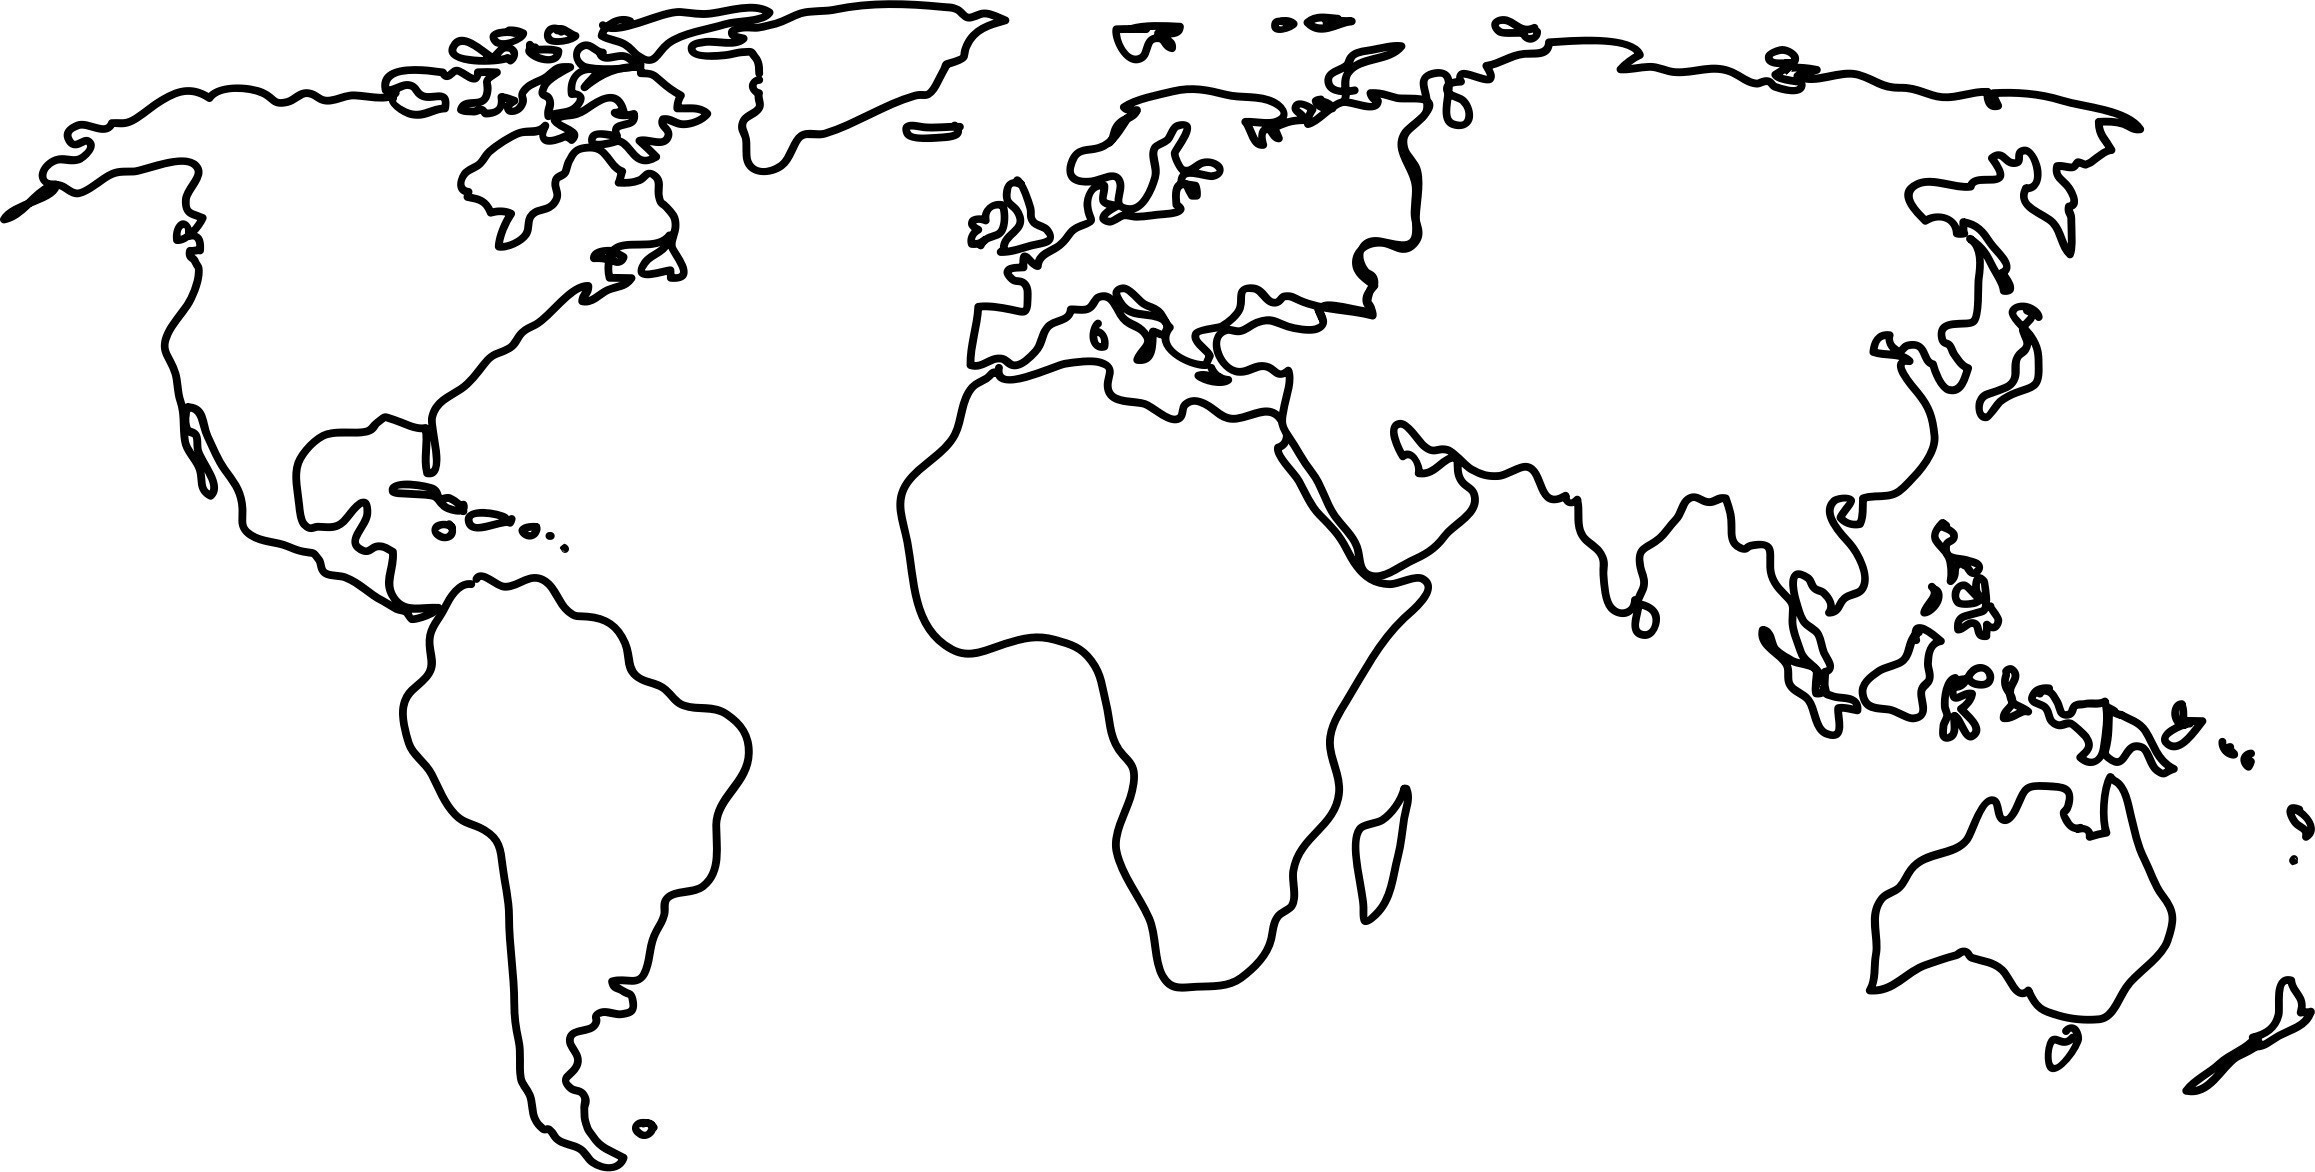 Concrete world map.